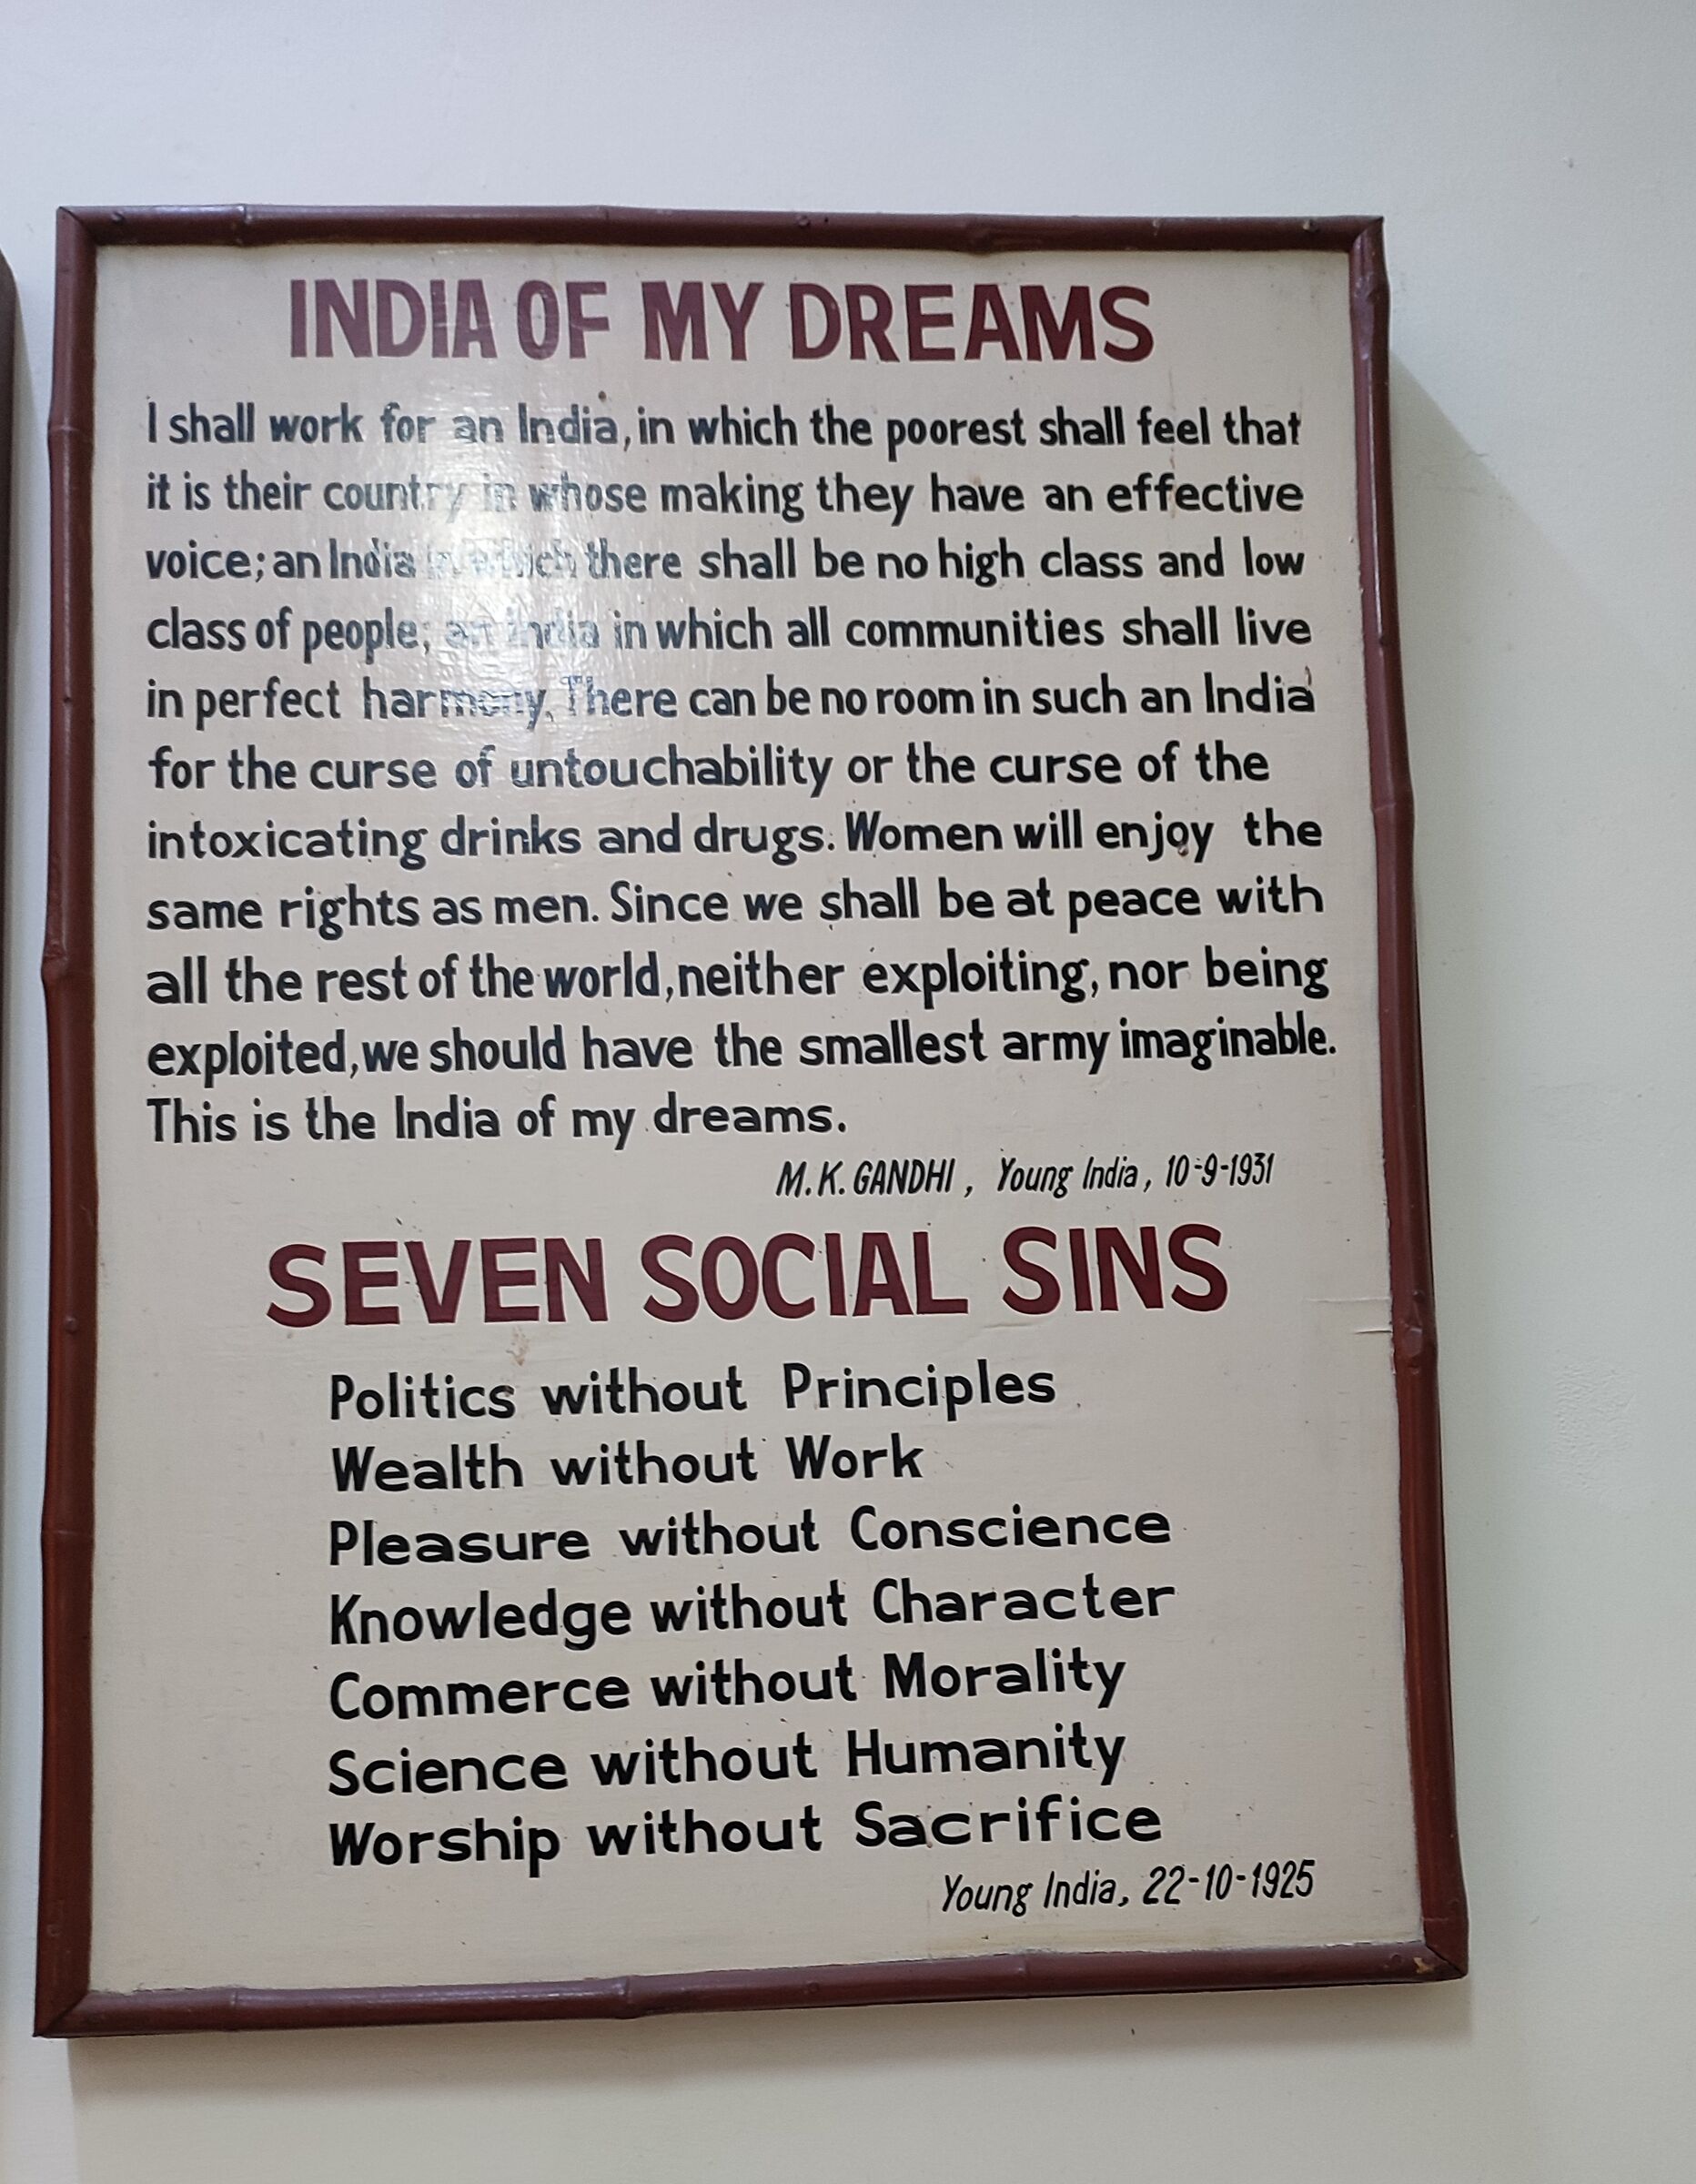 The Seven Social Sins...